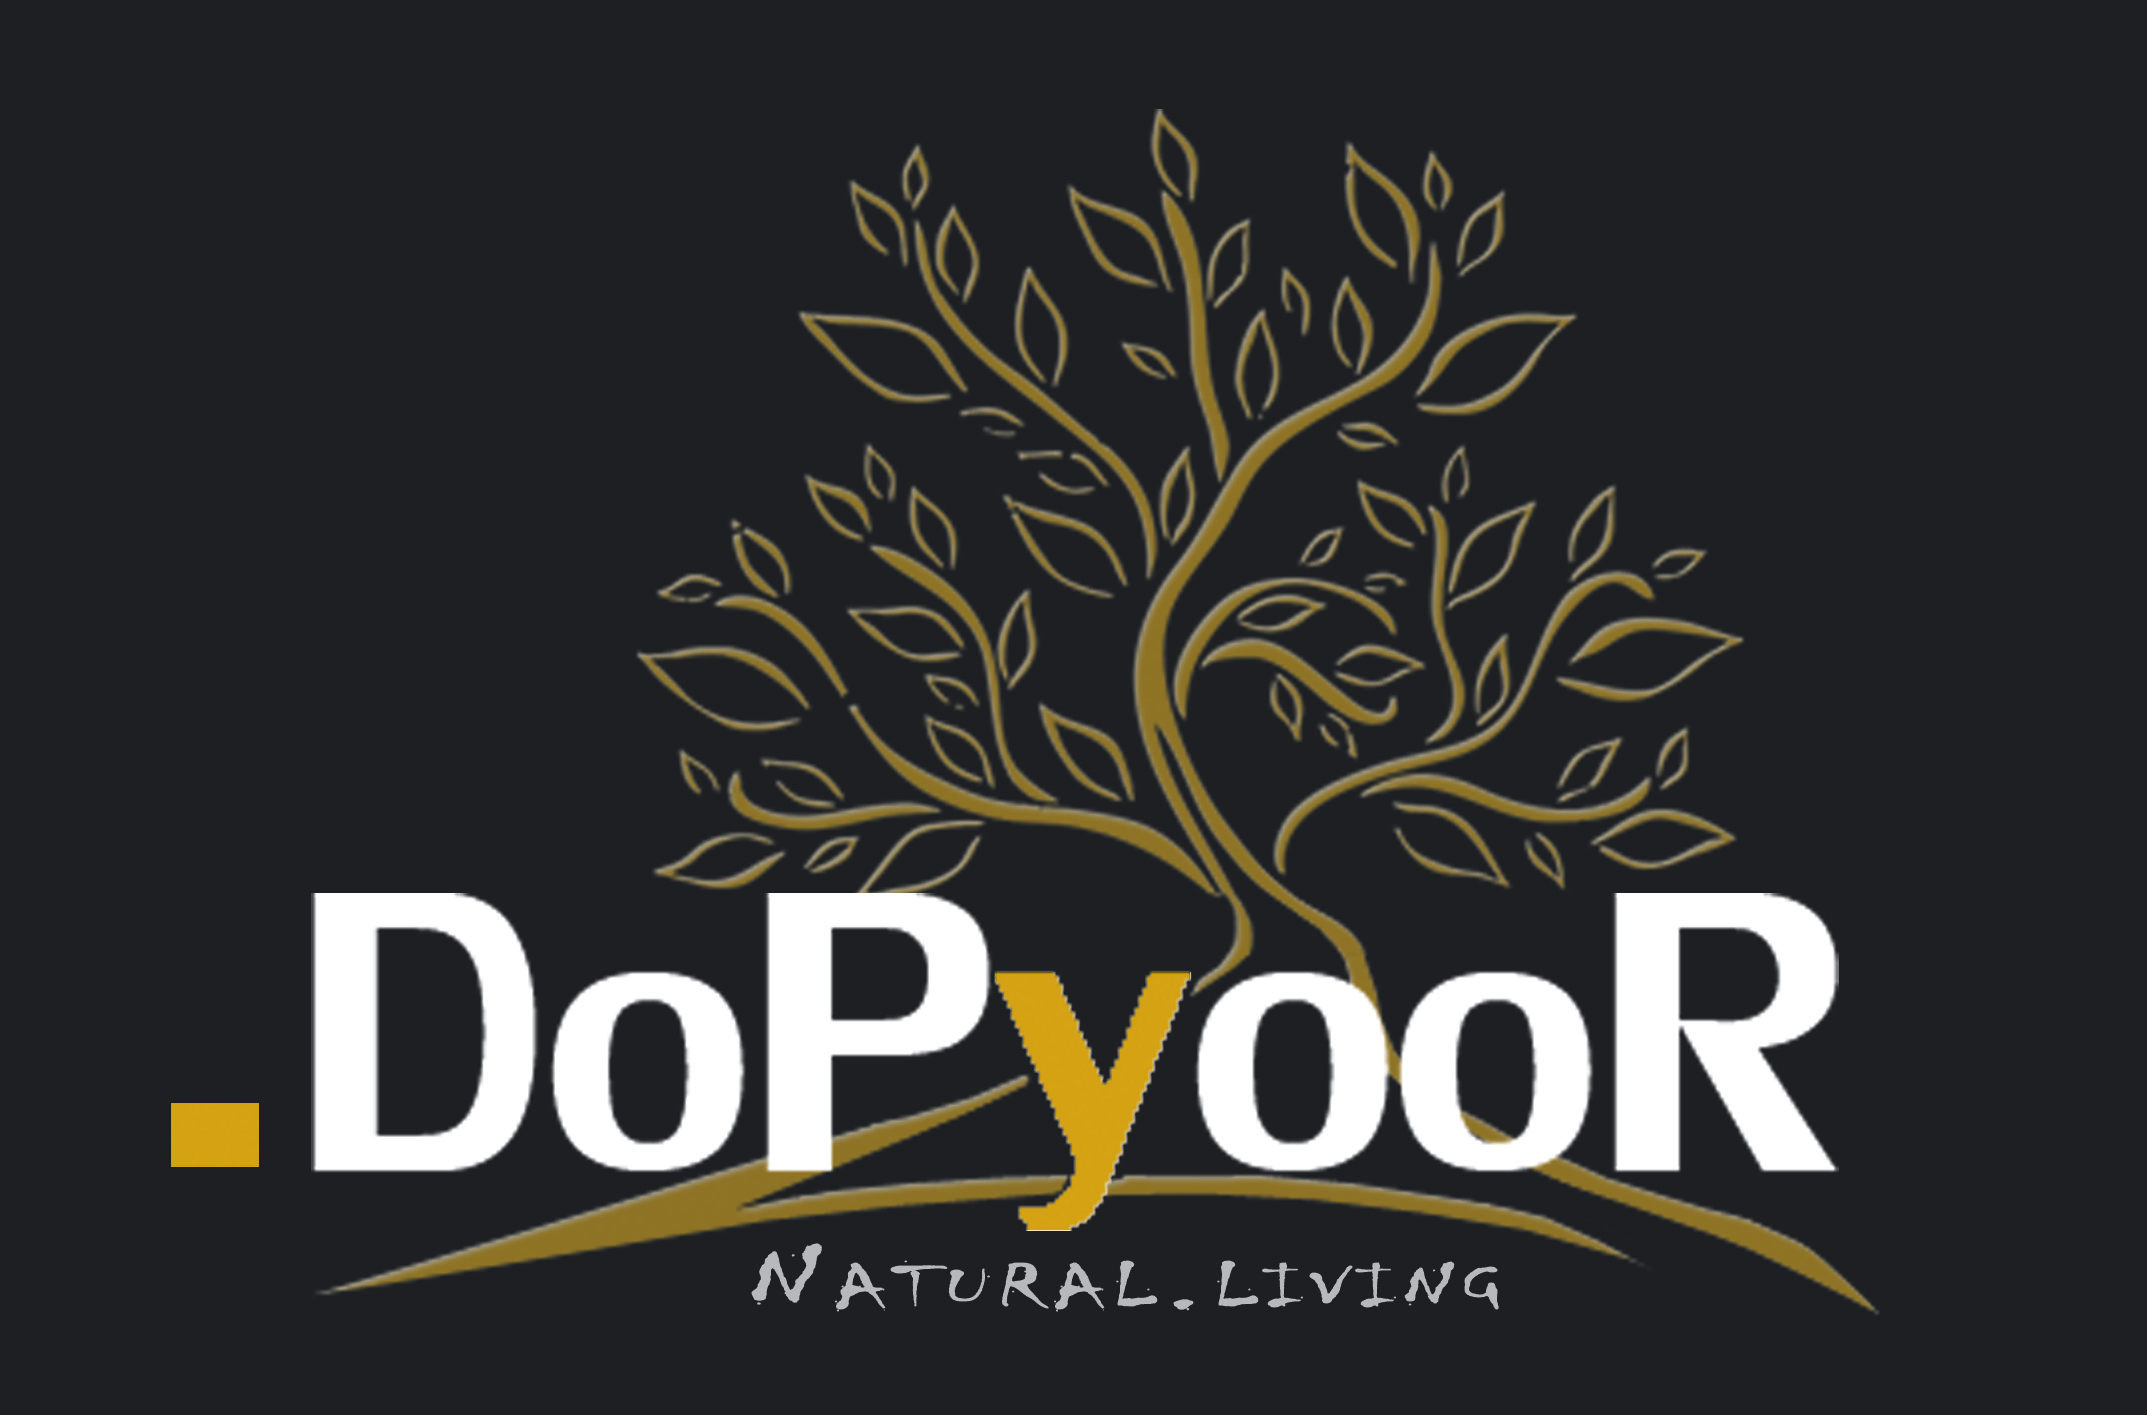 DoPyooR – Institute for natural living